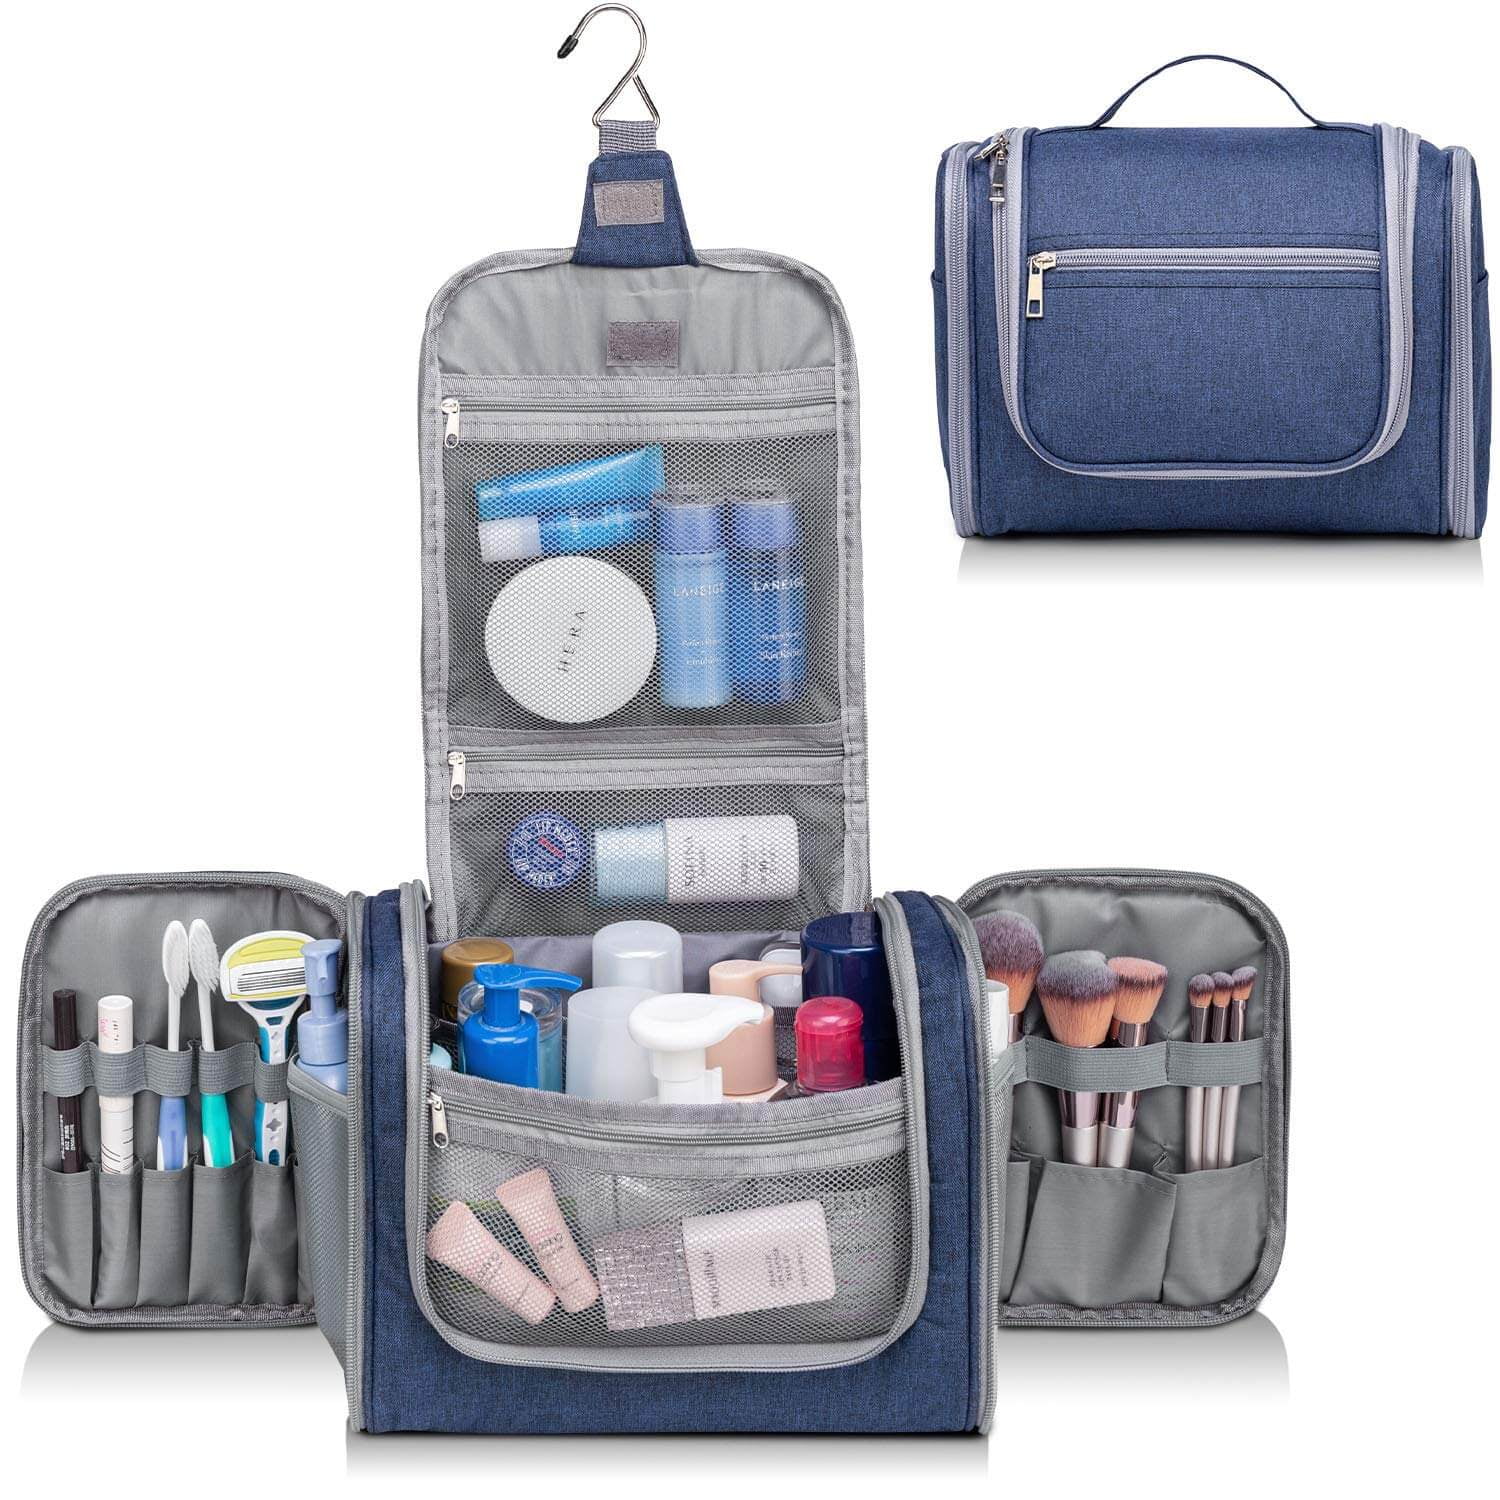 Cosmetic travel bag set